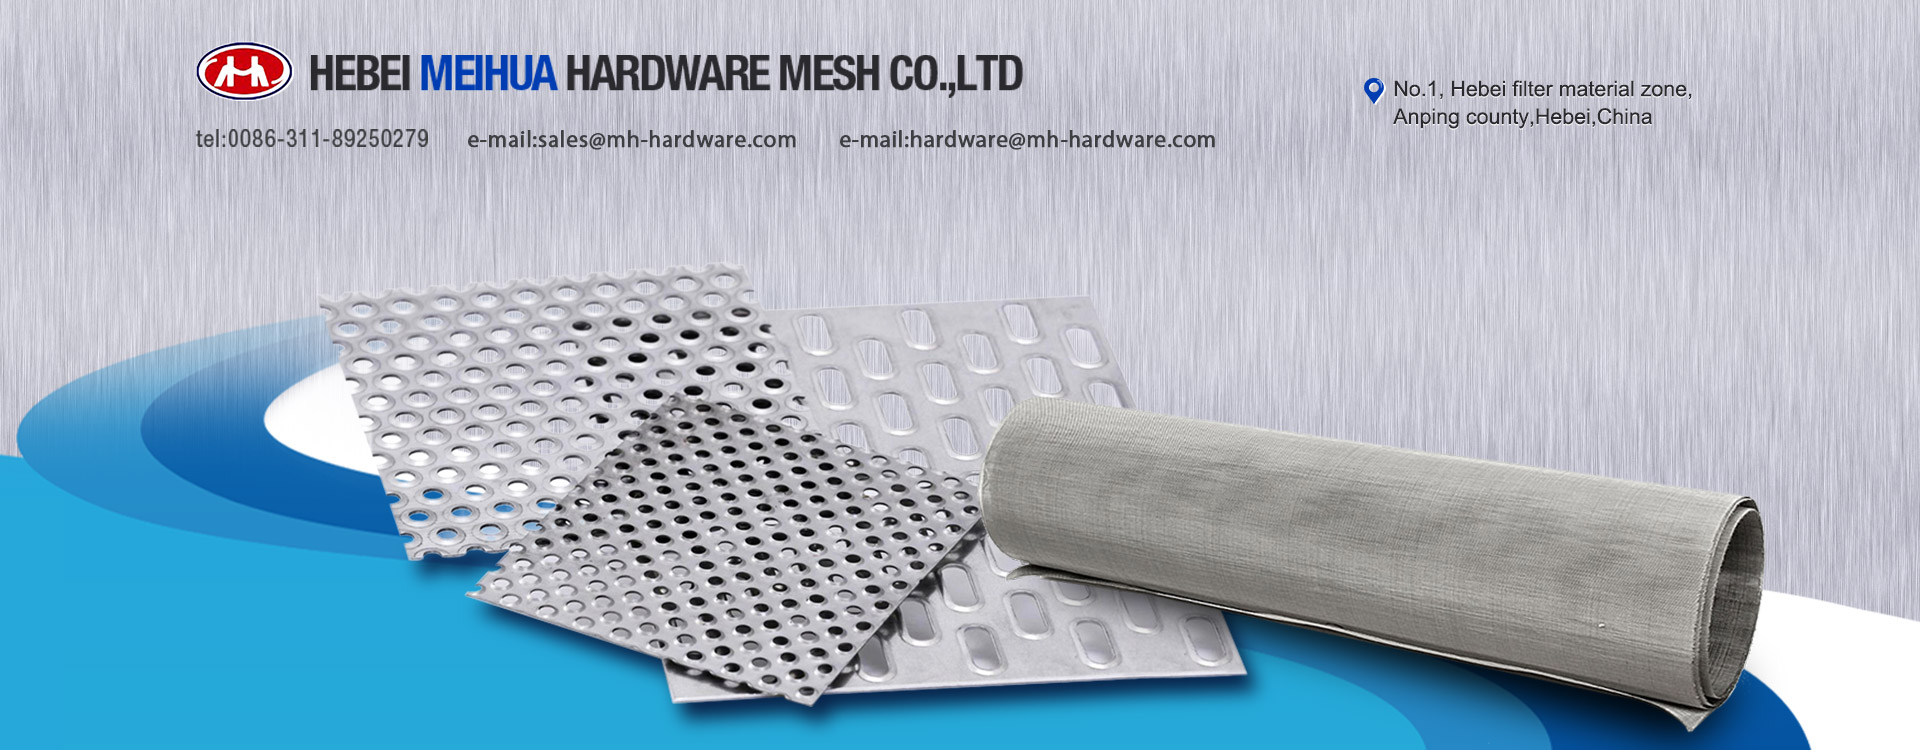 Hebei Meihua Hardware Mesh Co., Ltd.